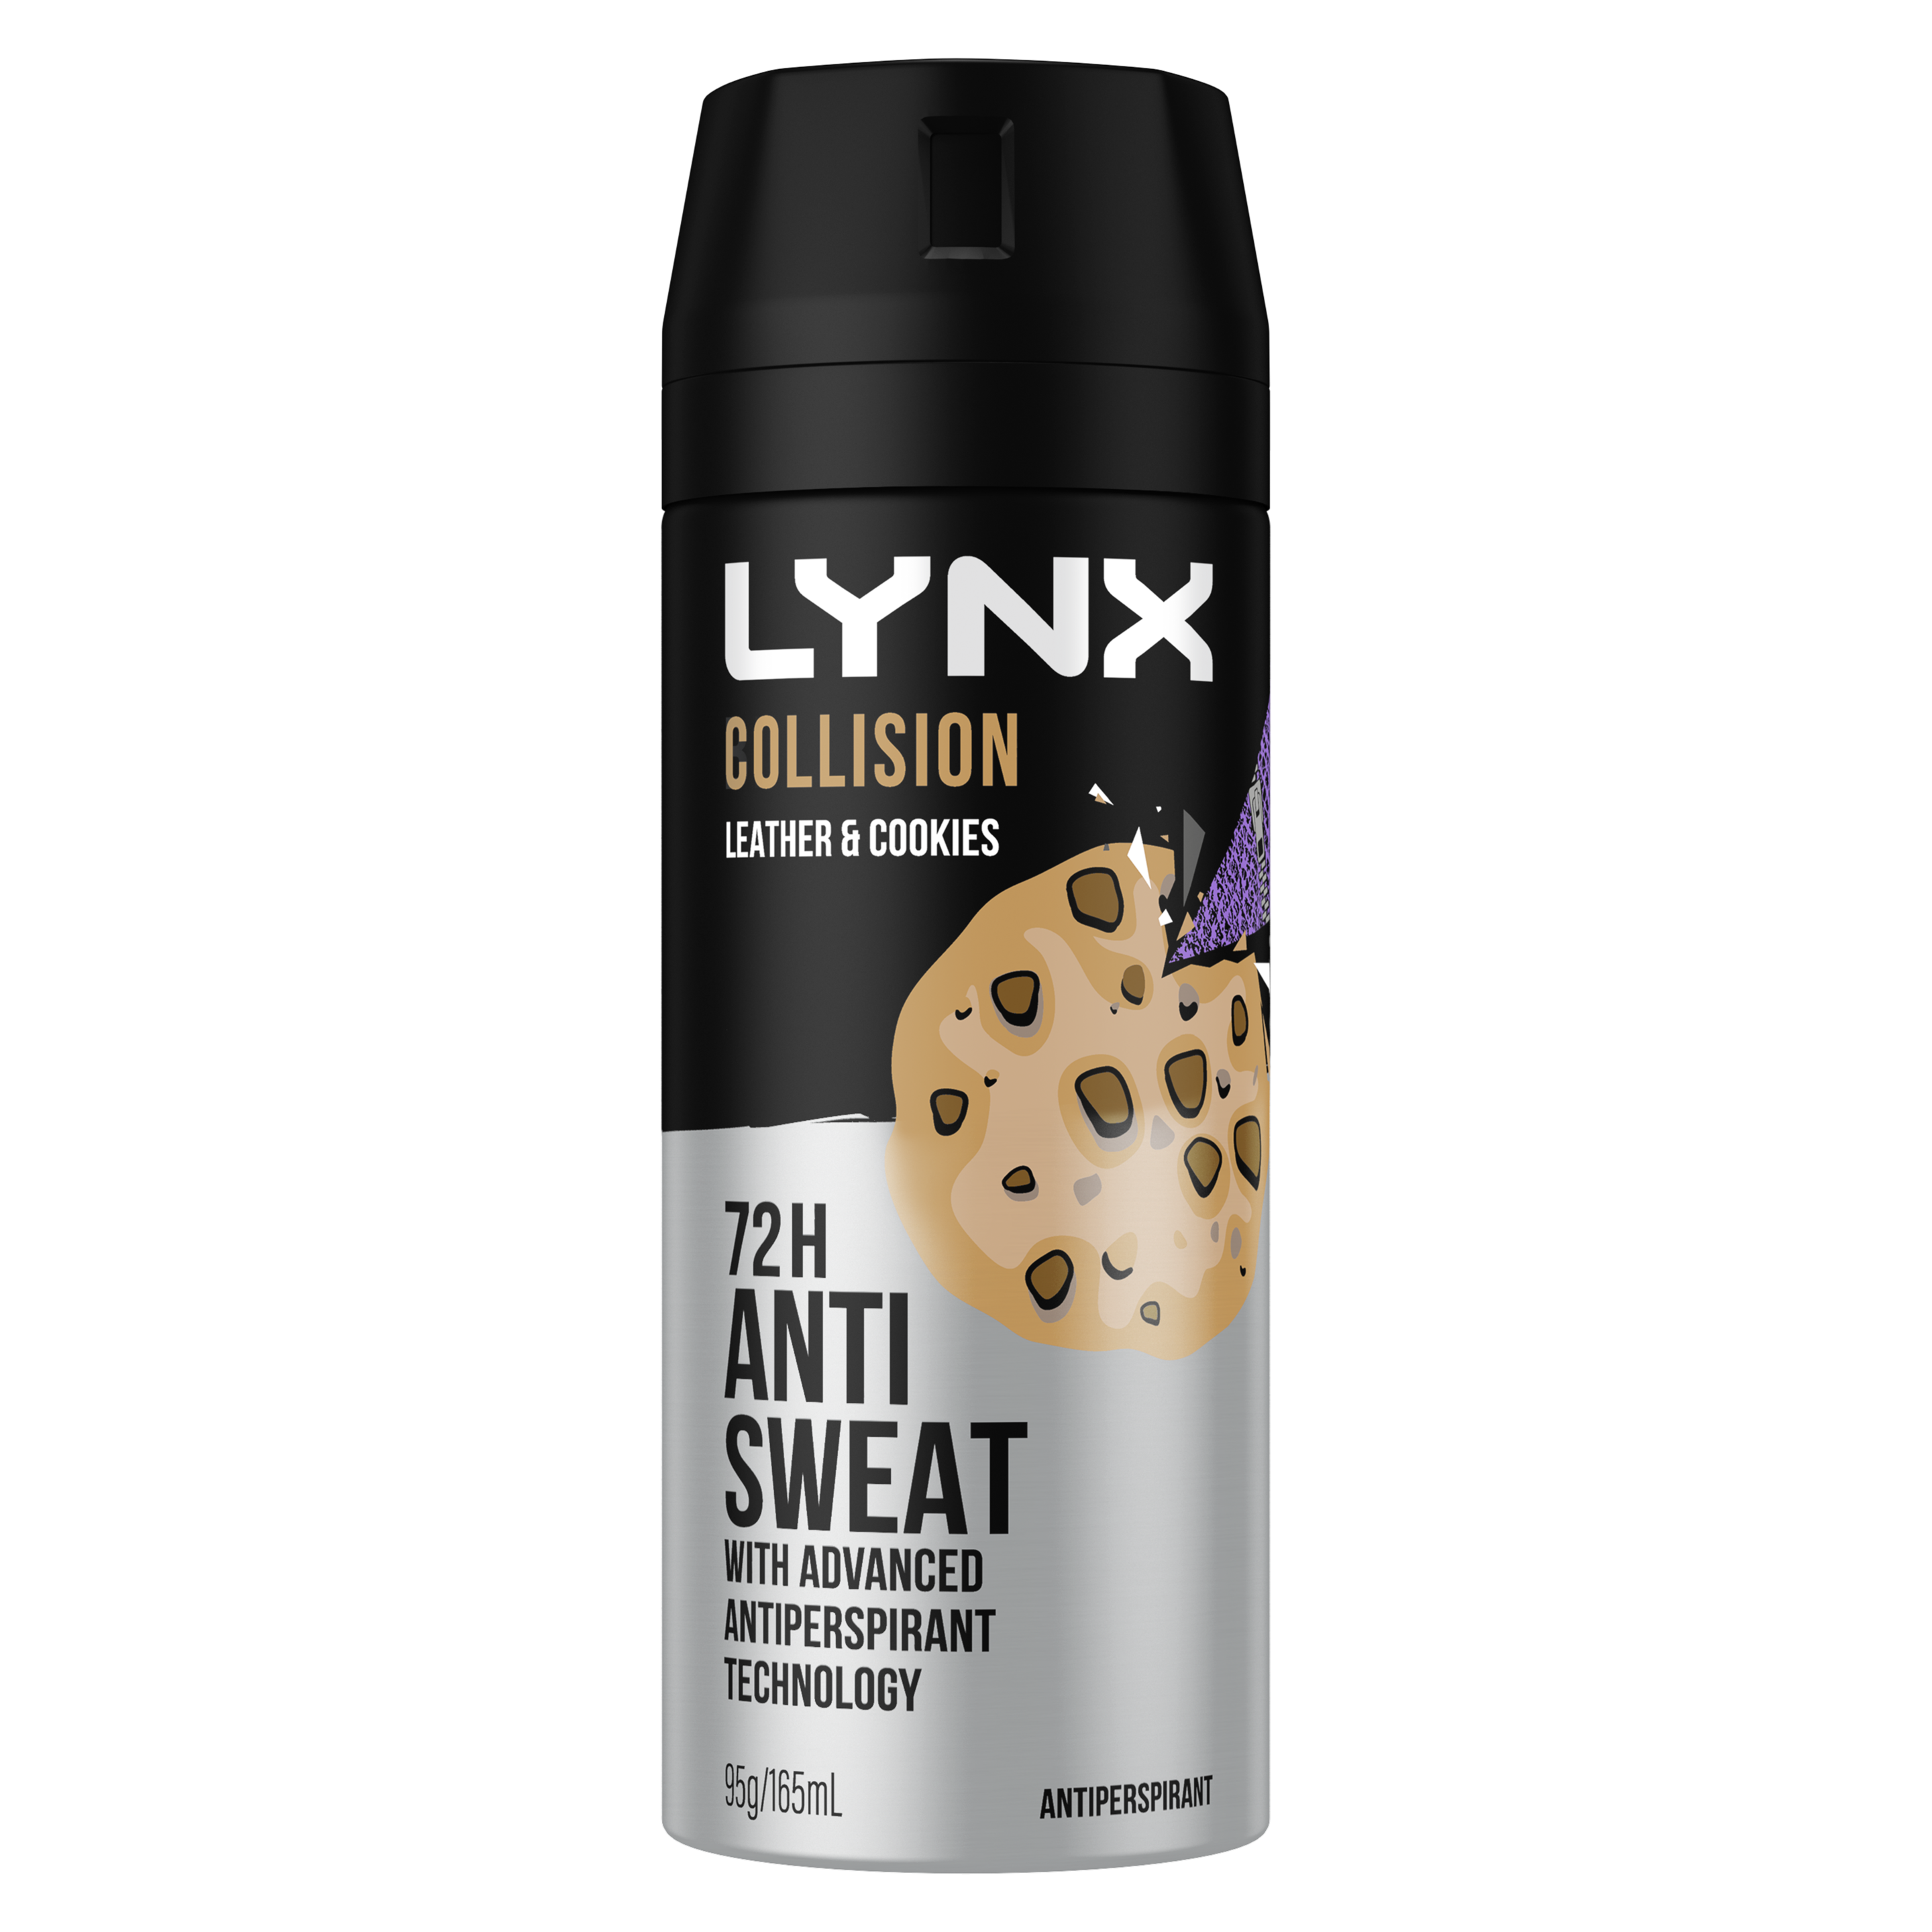 Lynx Collisions Leather + Cookies Antiperspirant